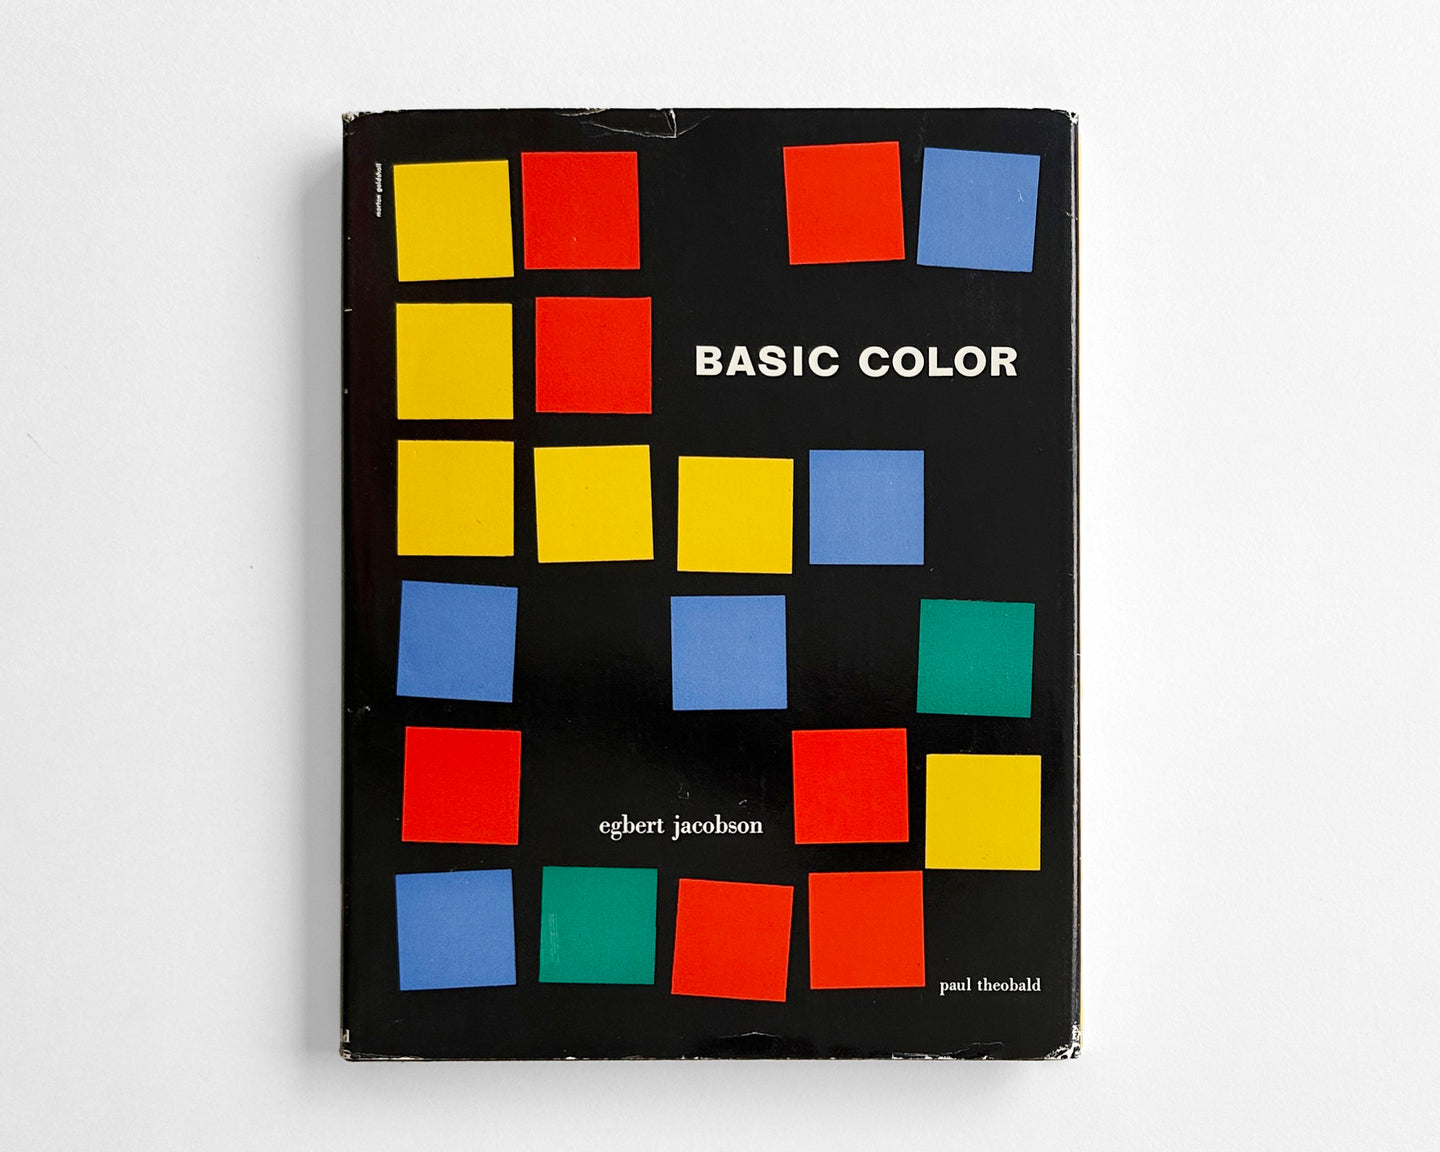 Basic Color: An Interpretation of the Ostwald Theory by Egbert Jacobson [Morton Goldsholl]